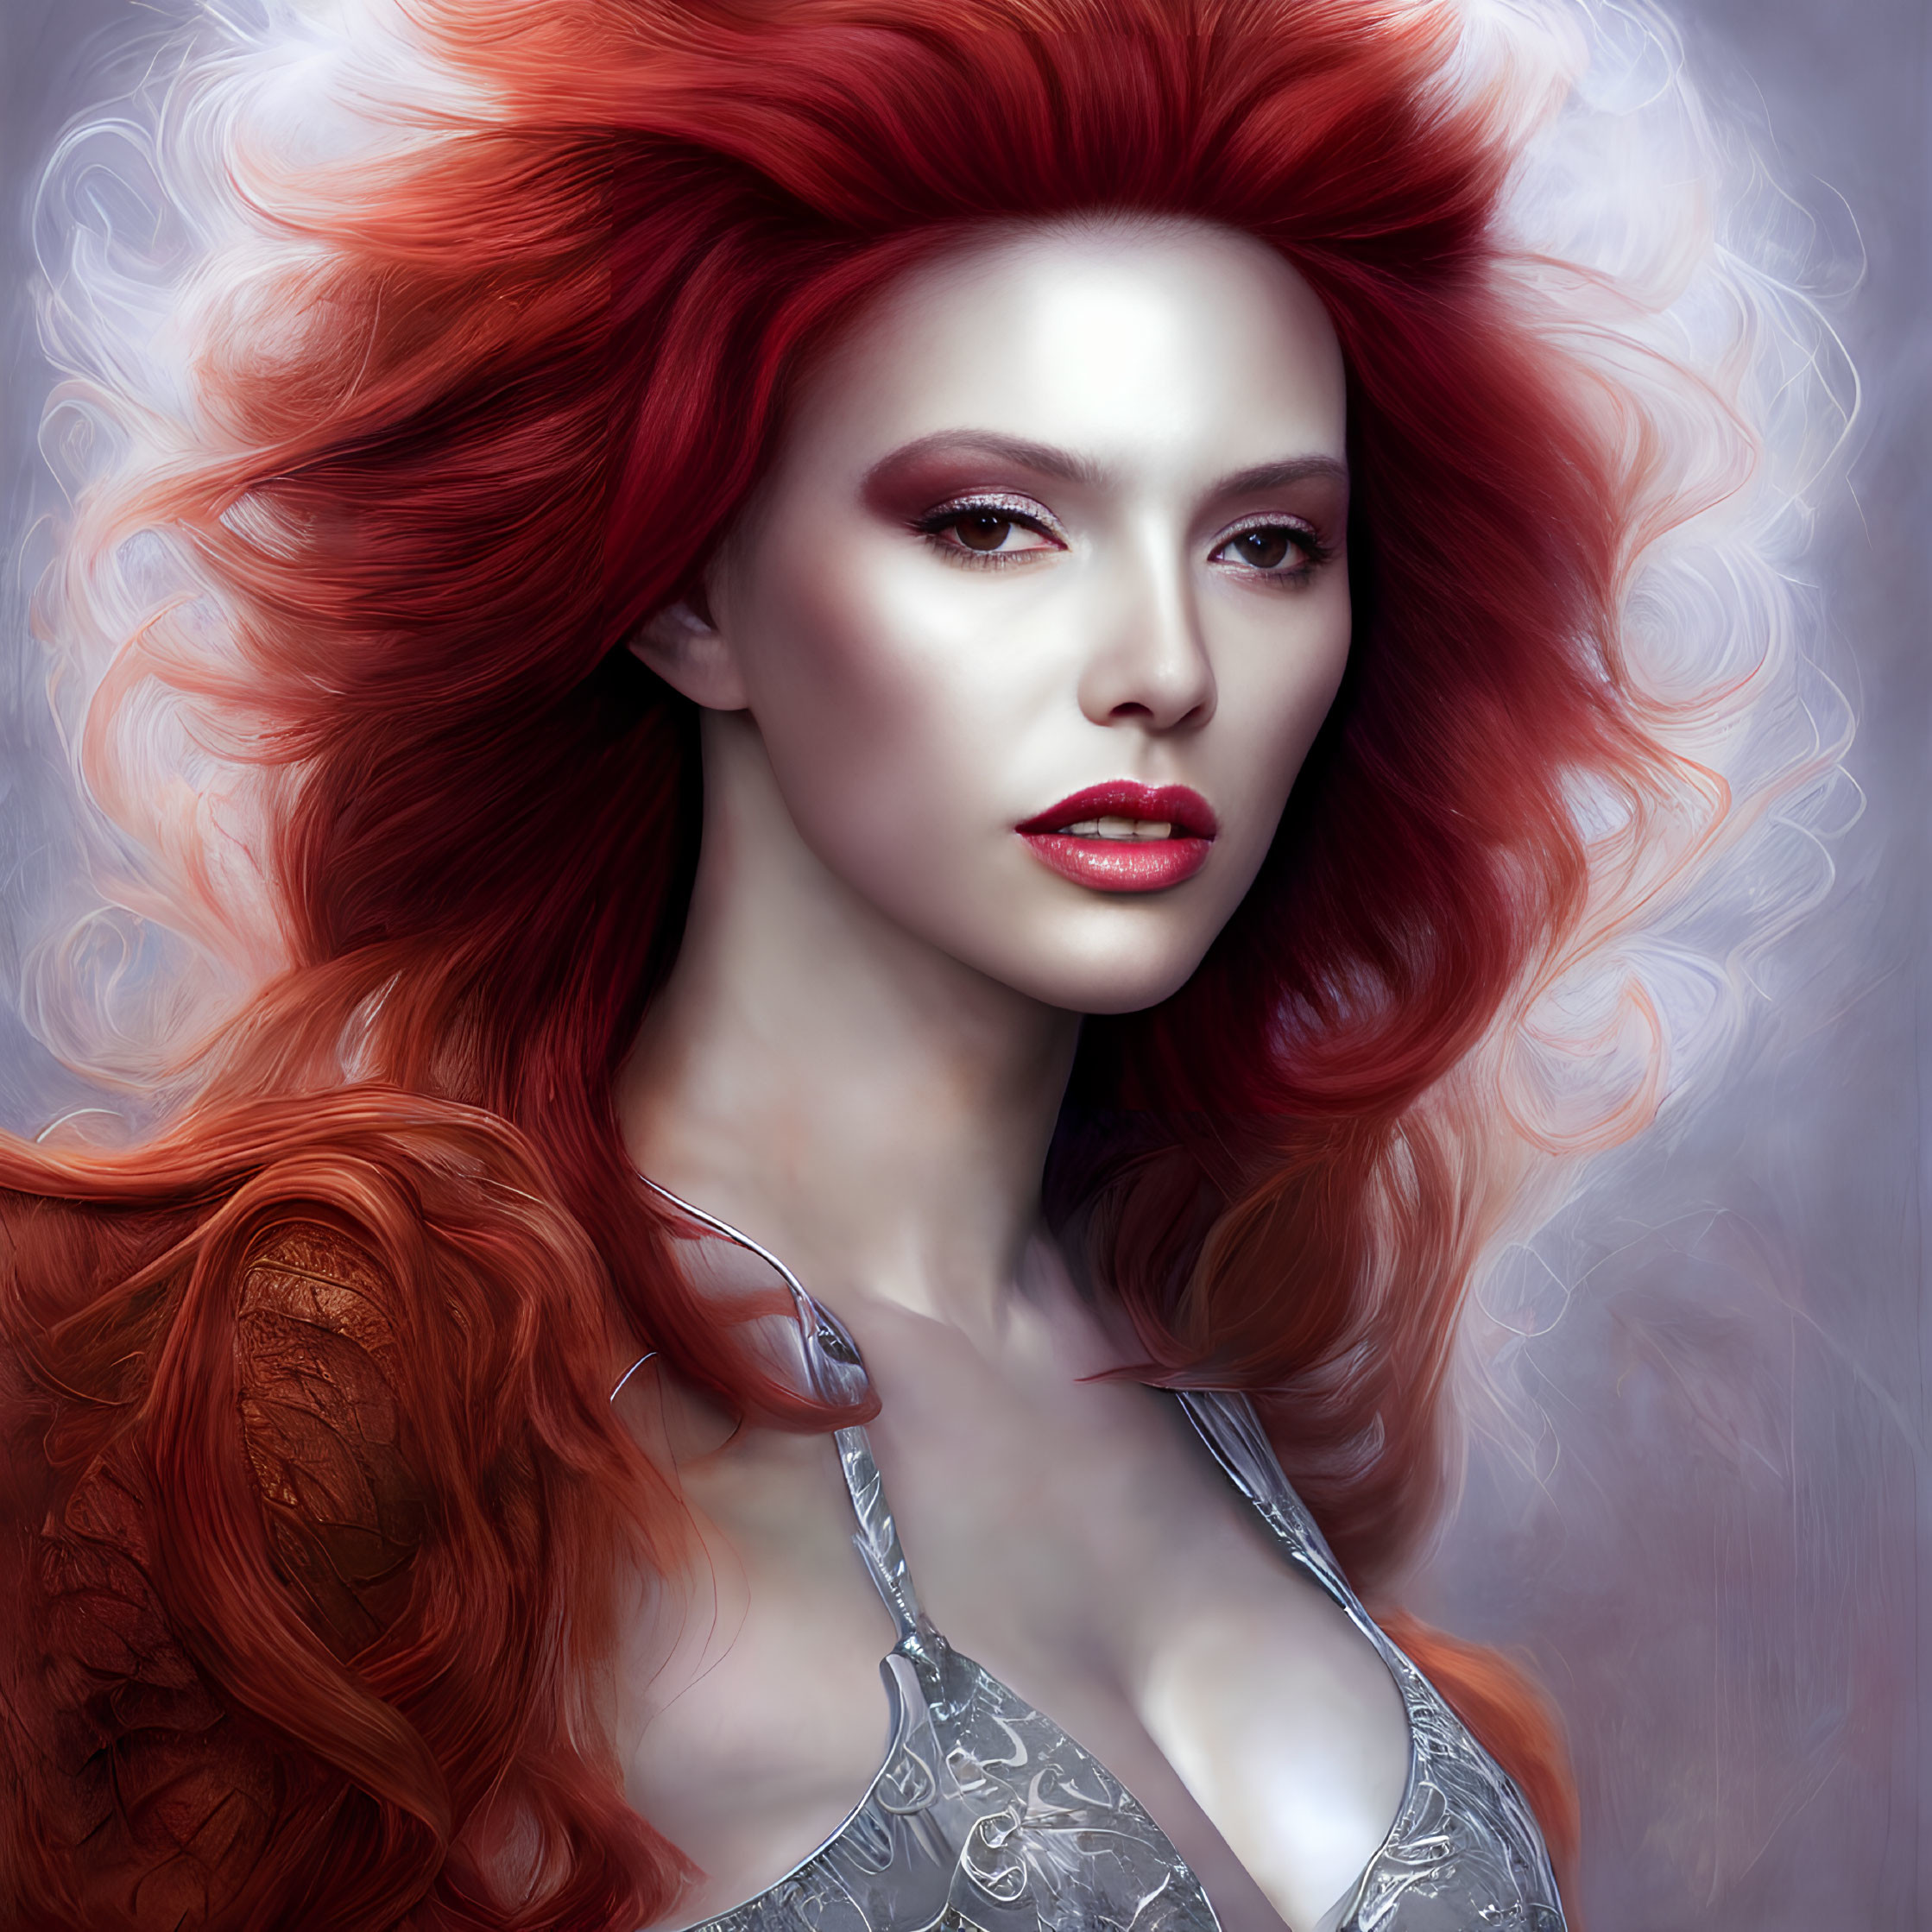 Voluminous Red Hair Woman Portrait with Striking Makeup